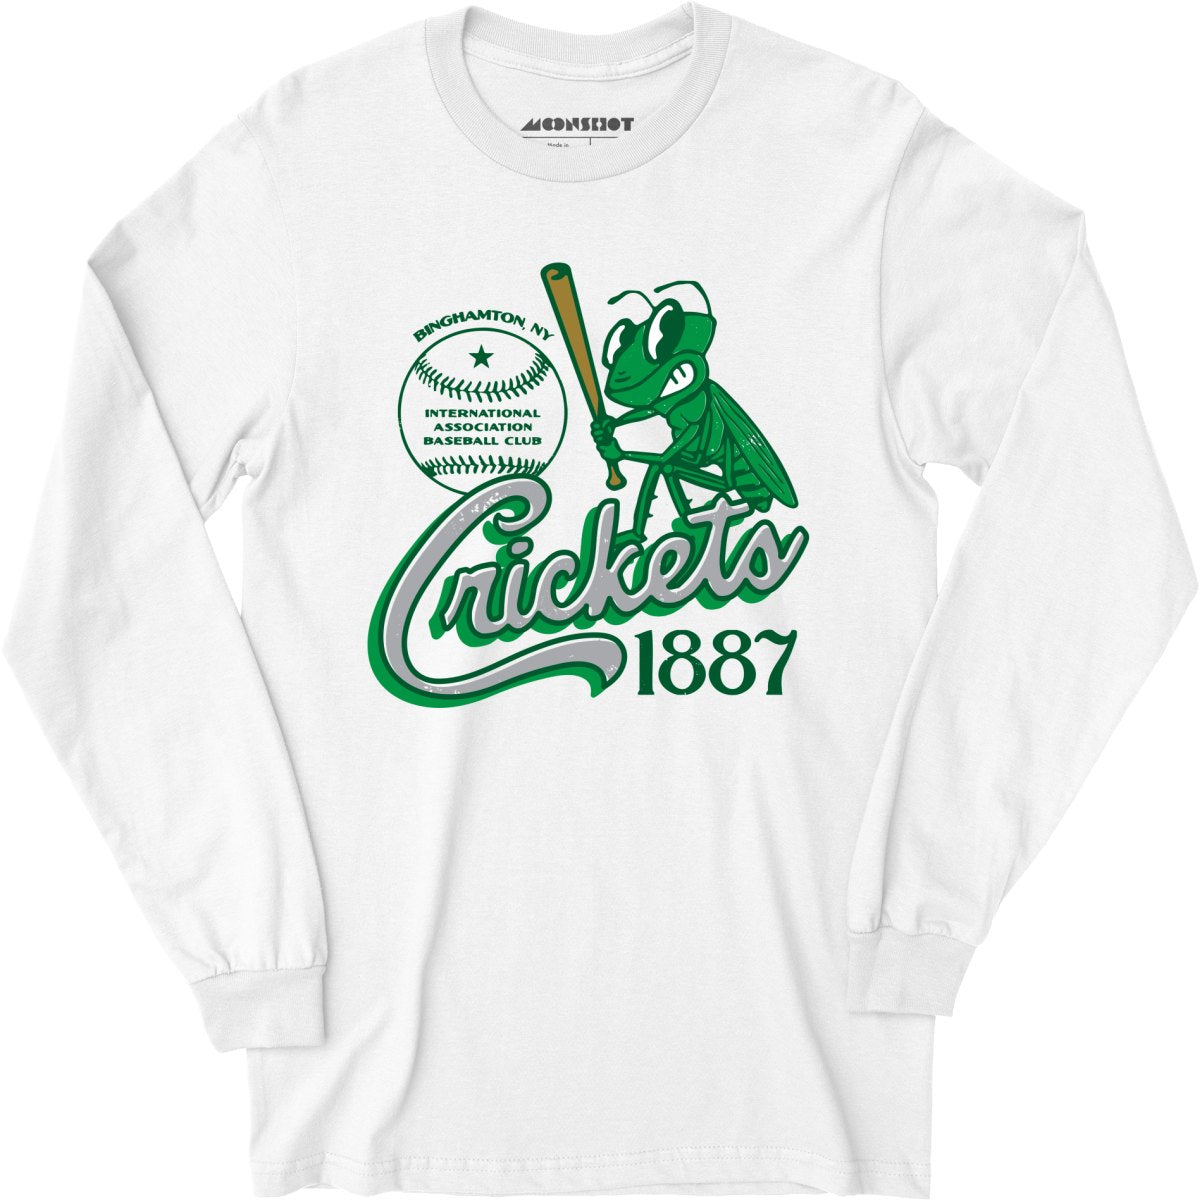 Binghamton Crickets - New York - Vintage Defunct Baseball Teams - Long Sleeve T-Shirt